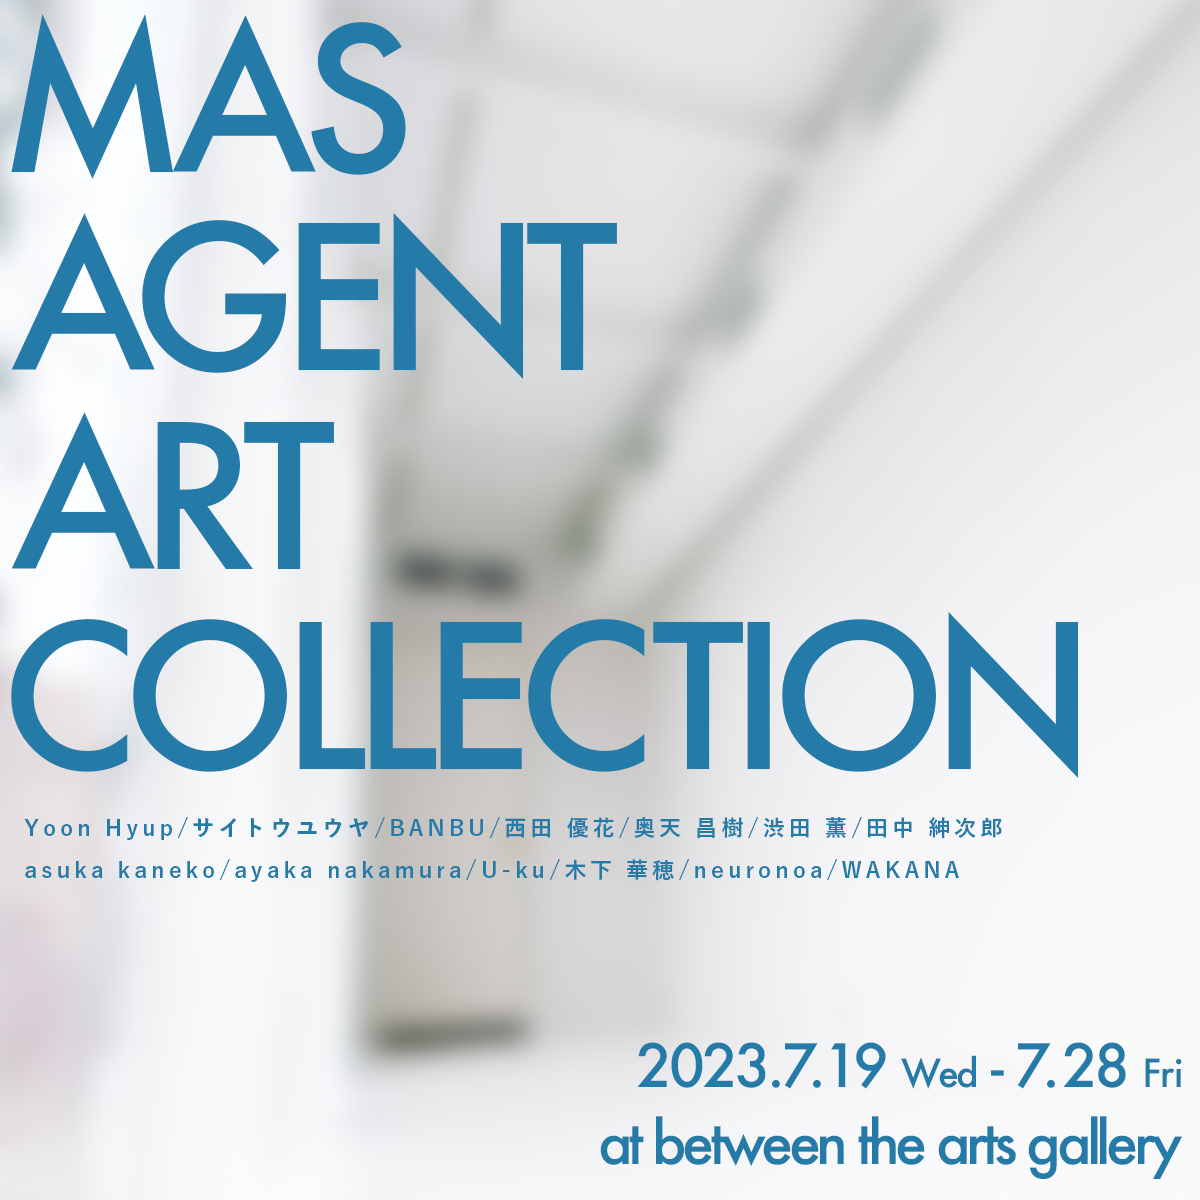 MAS AGENT ART COLLECTION